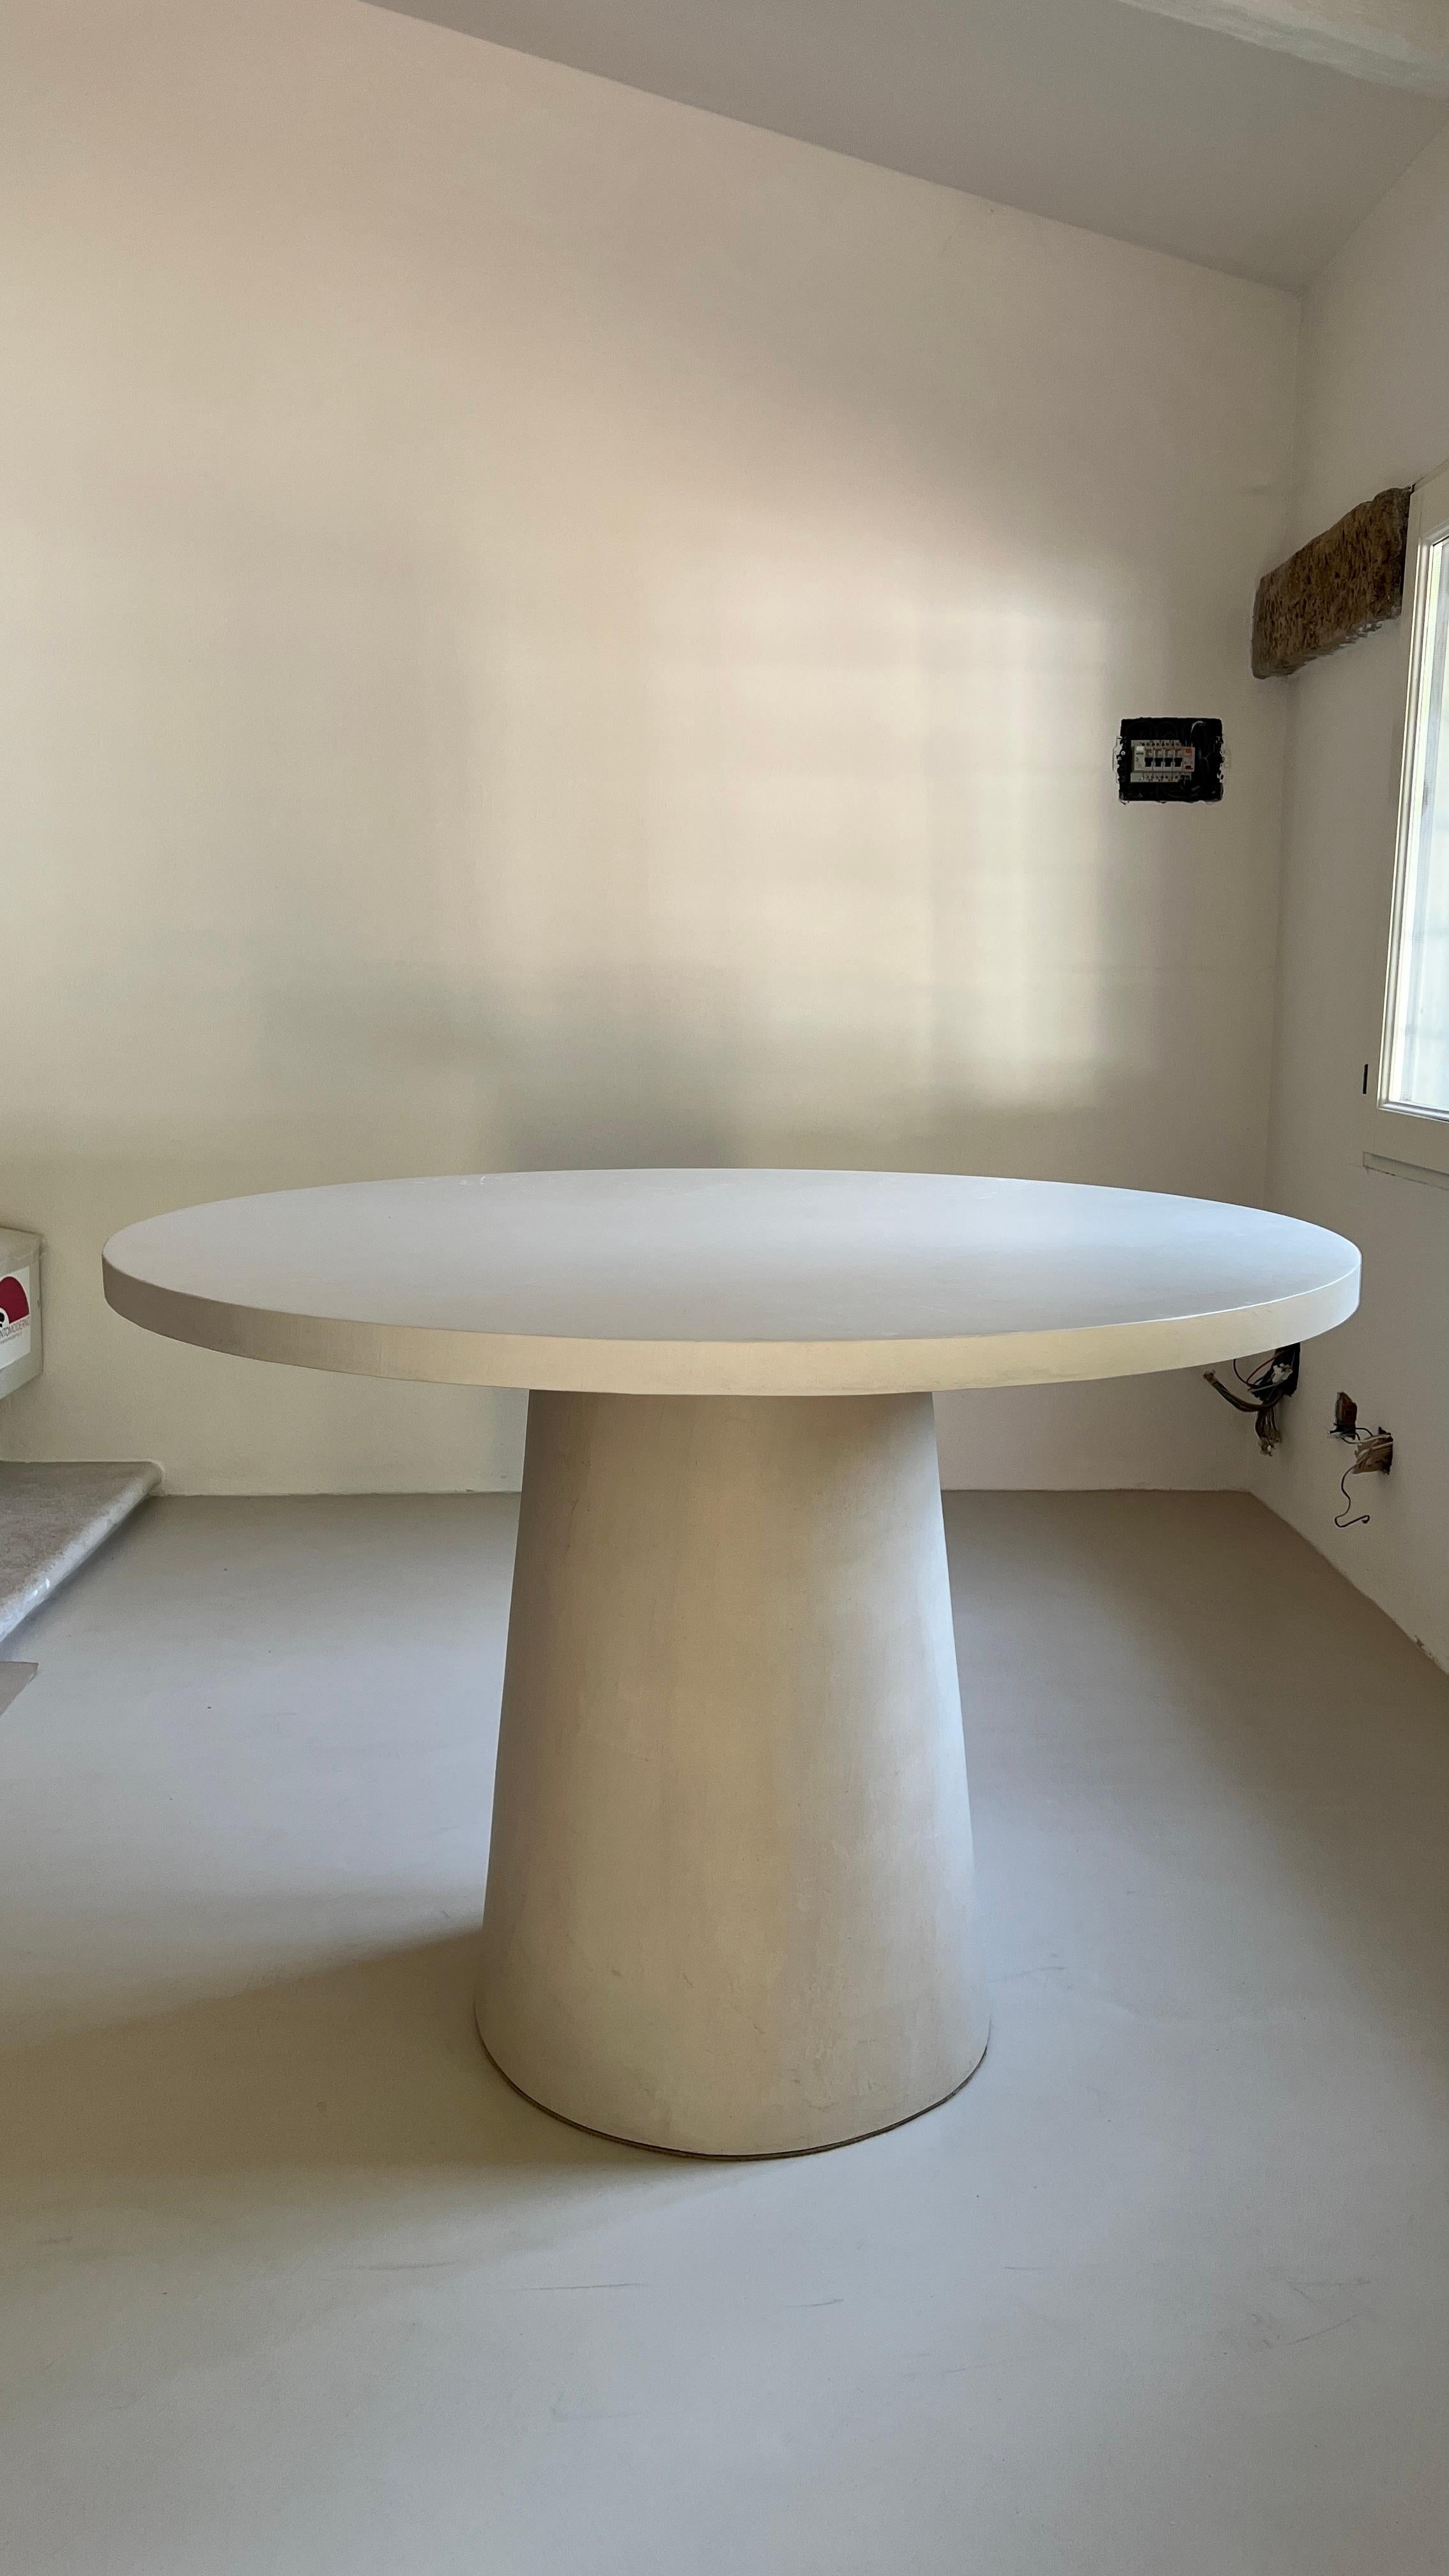 Duplex Corda Table in Resin 1